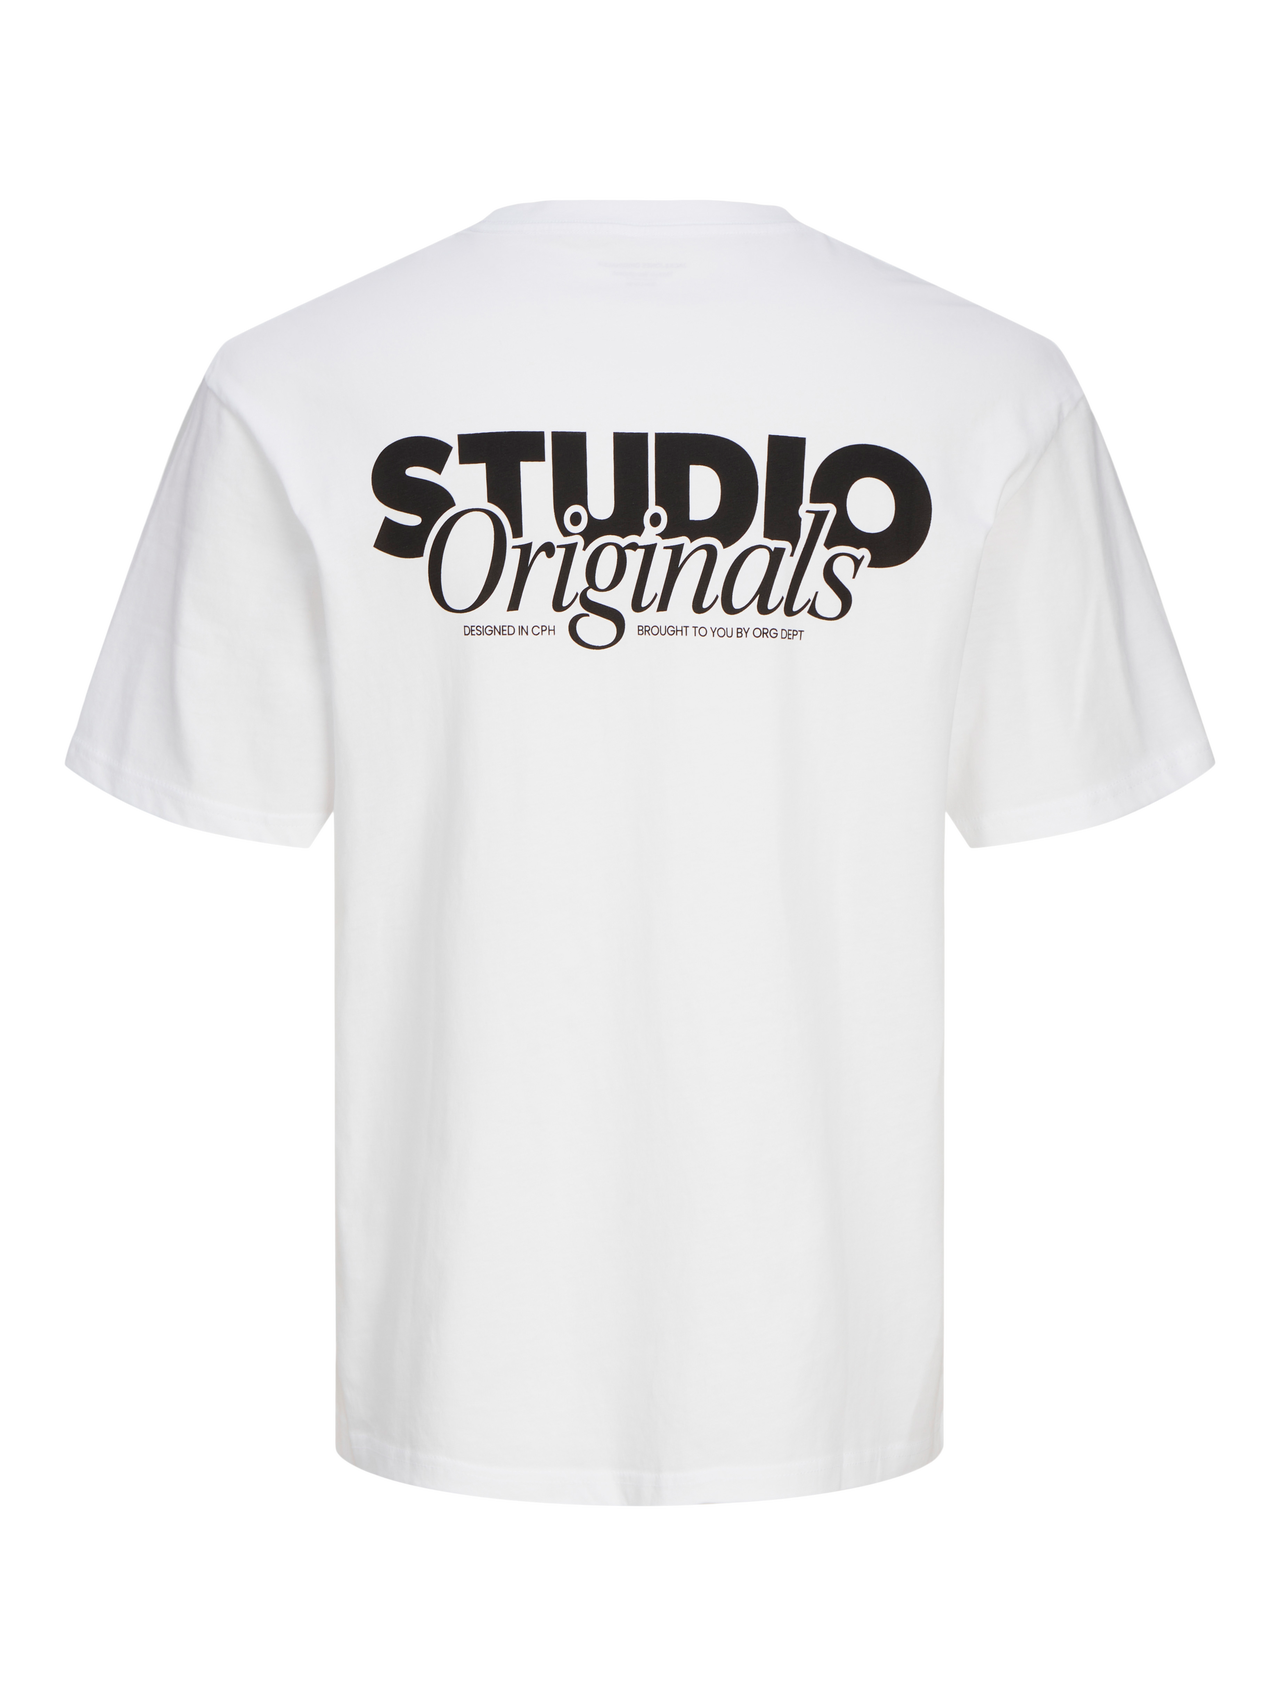 Jack & Jones Printed Crew neck T-shirt -Bright White - 12240122